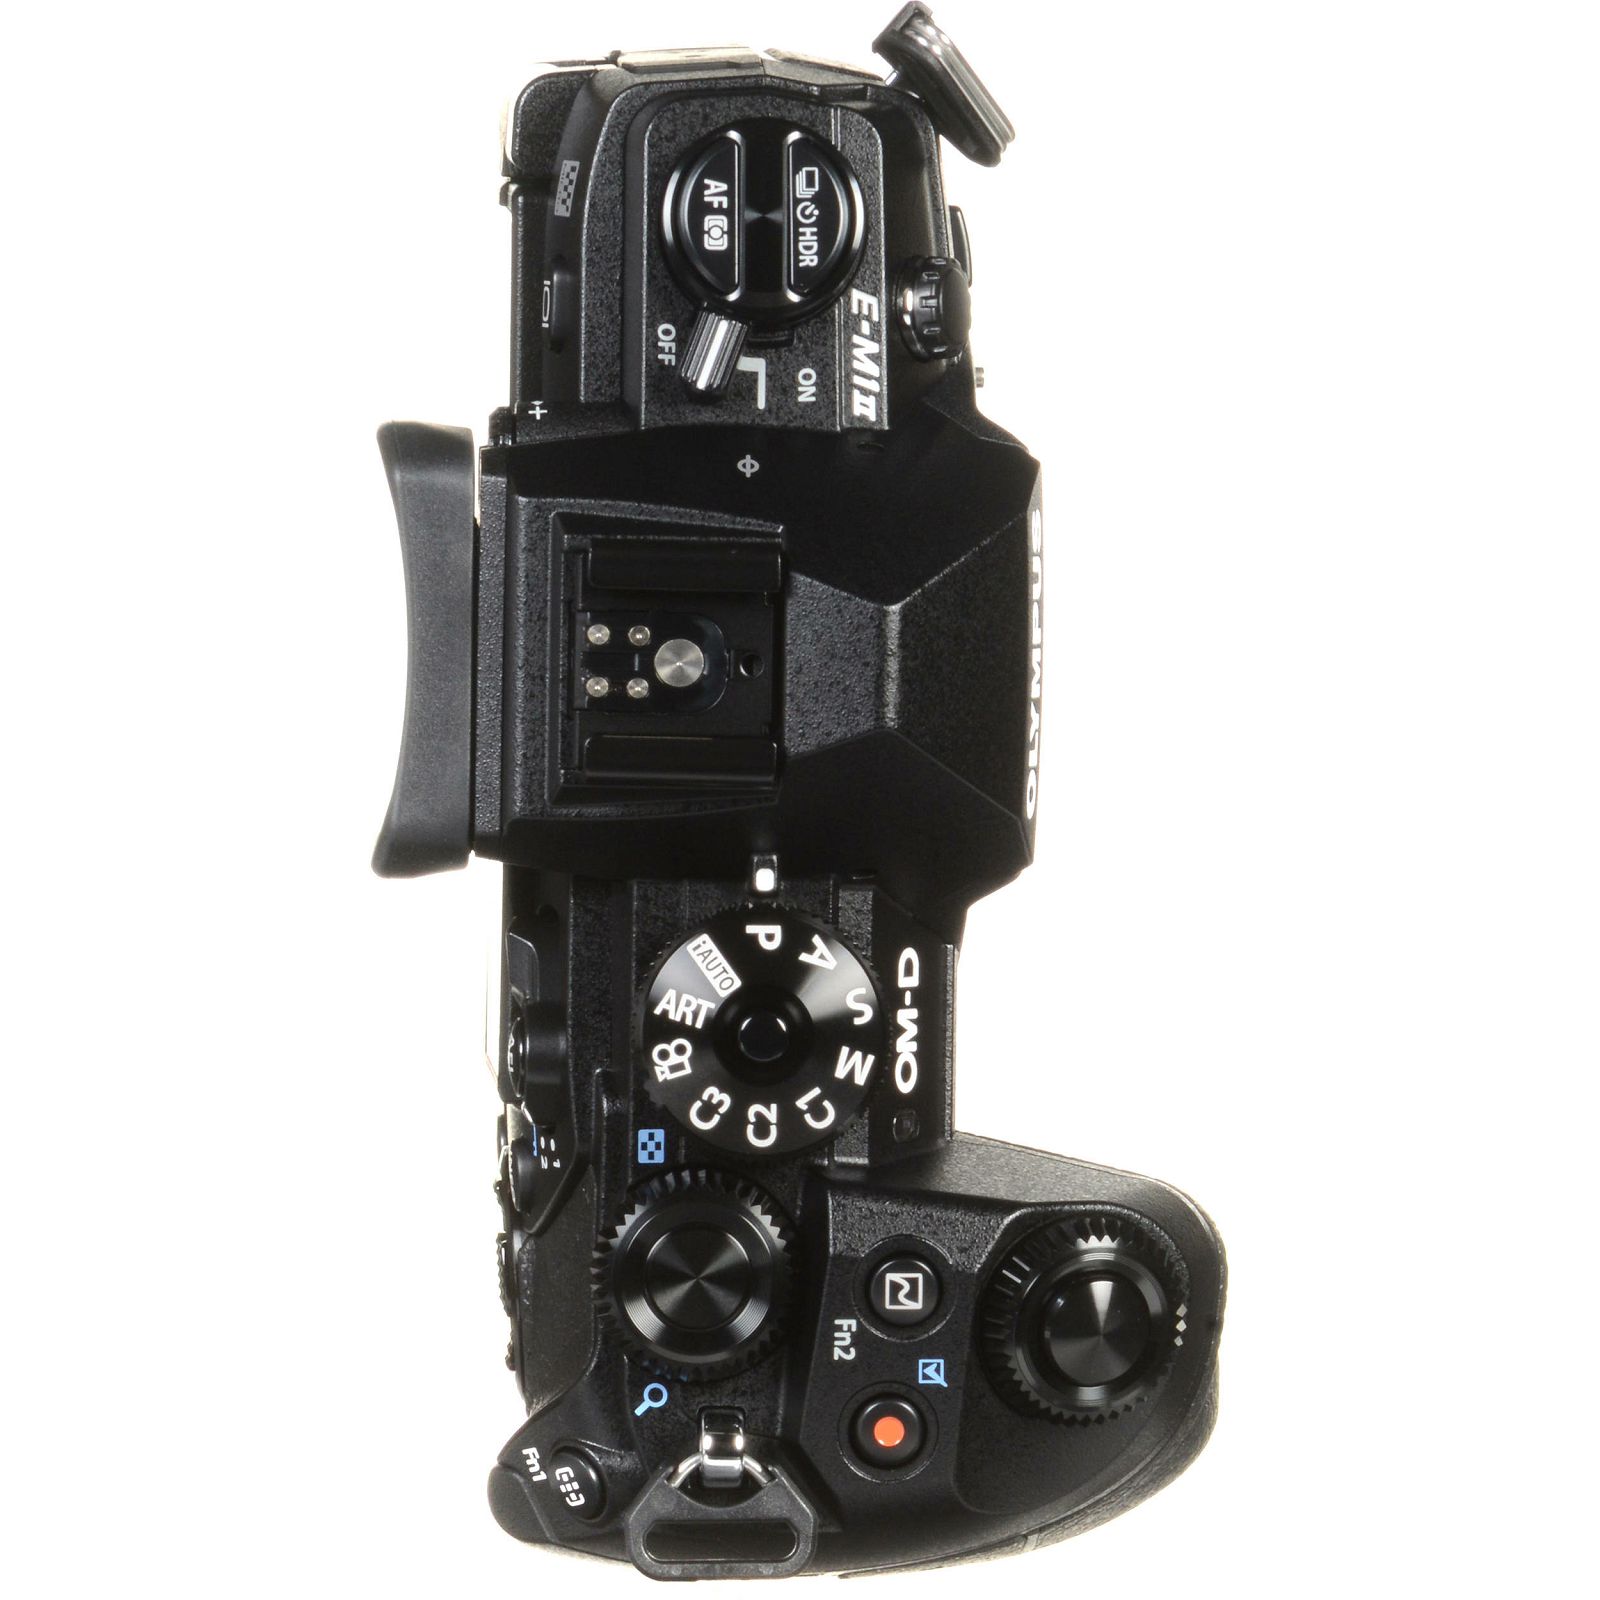 Olympus E-M1 II + 12-100mm PRO Black digitalni fotoaparat s objektivom EZ-M12-100 Mirrorless MFT Micro Four Thirds Digital Camera including Charger Battery and Lens Hood (V207060BE010)